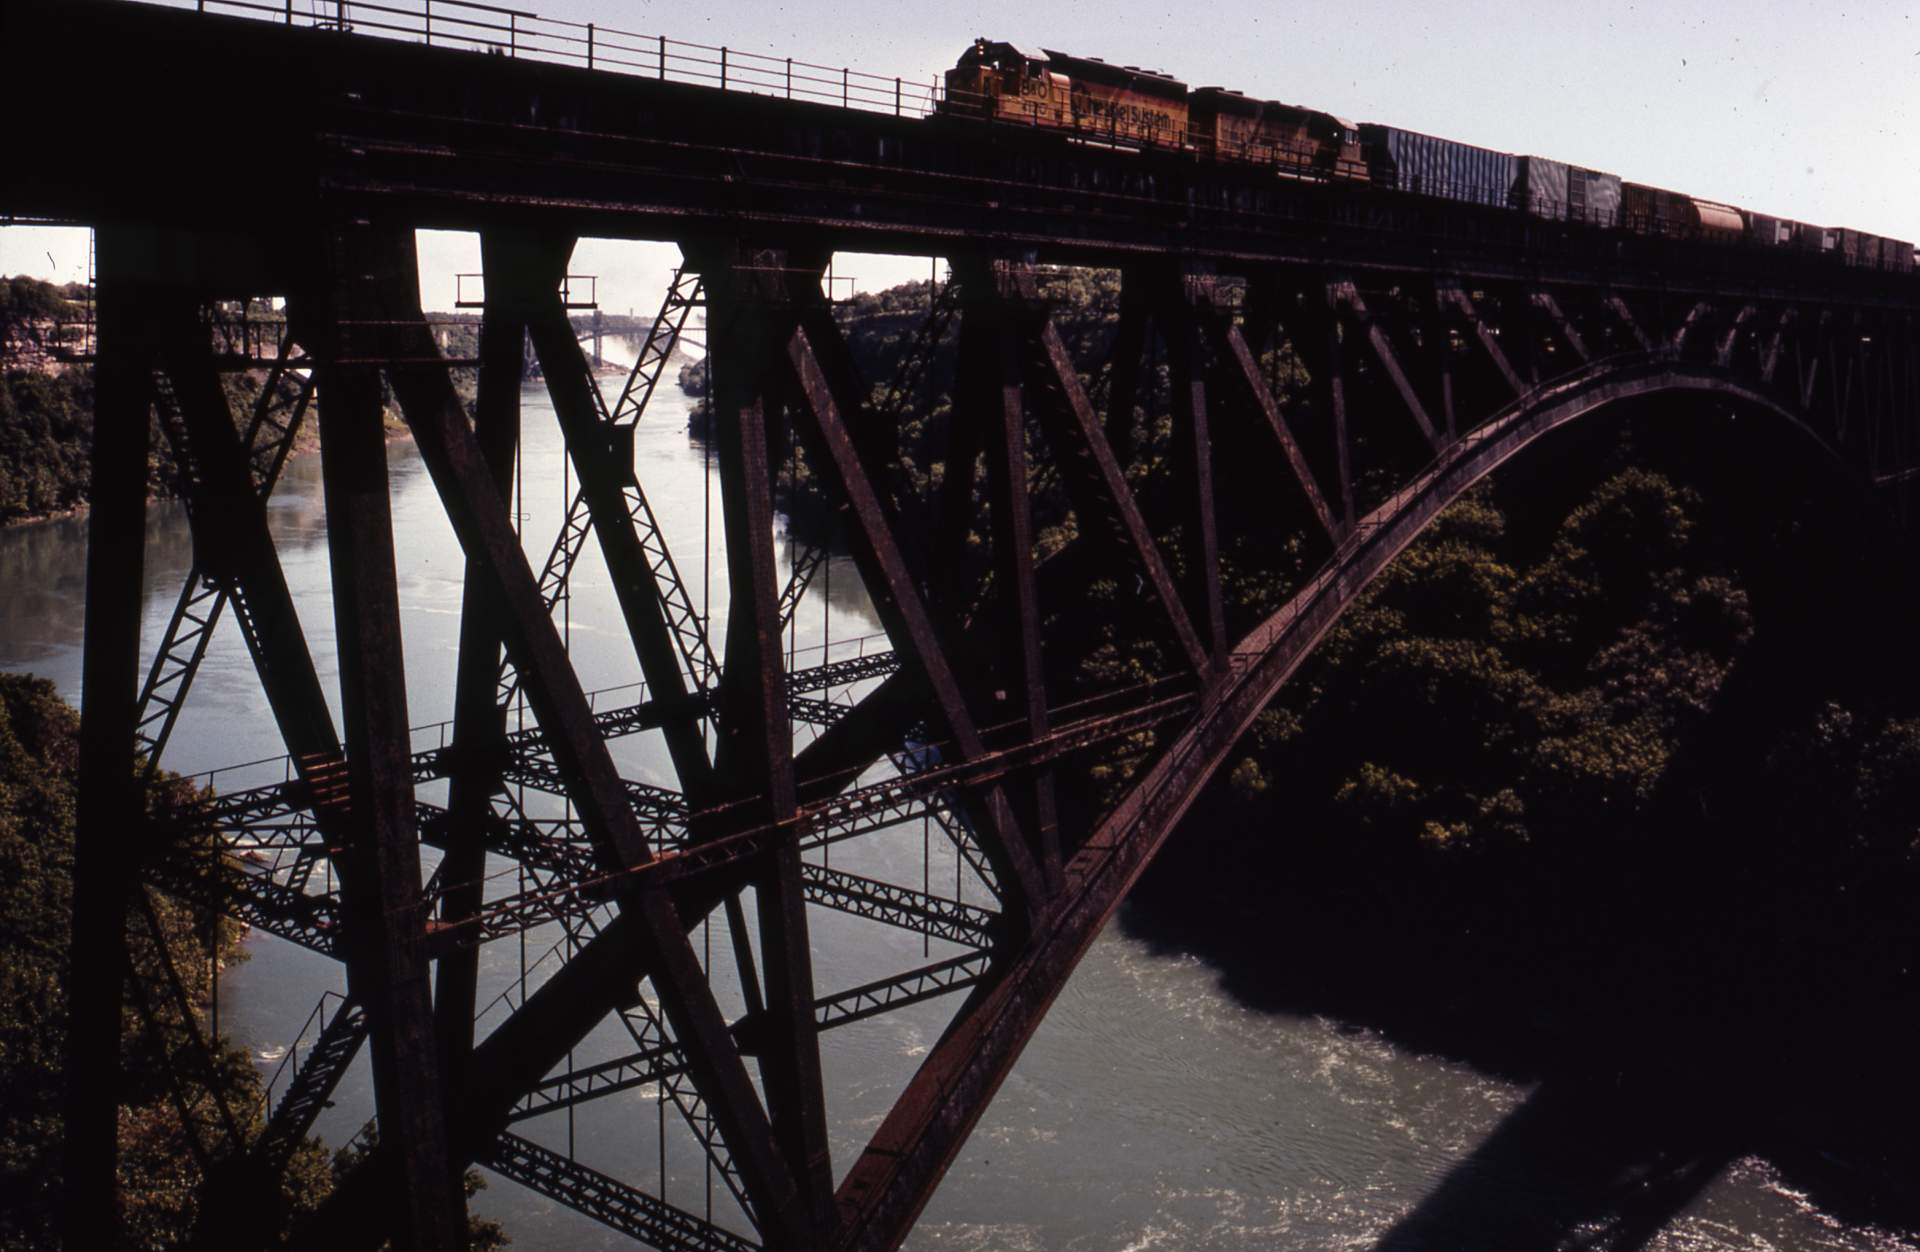 Rail Road Bridge with Freight Train